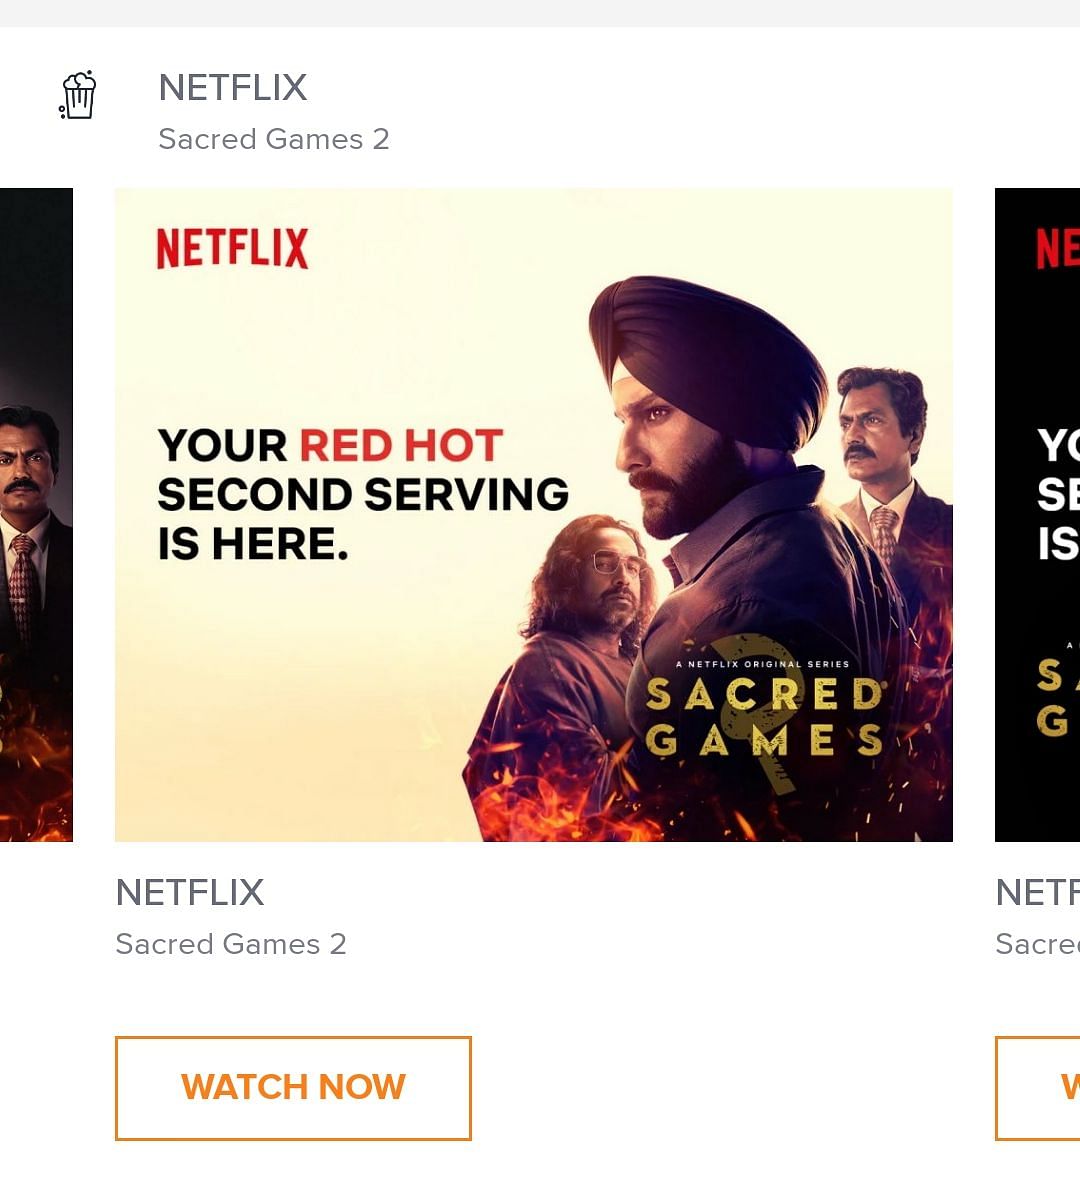 Netflix's 'Sacred Games' ads show up on Swiggy...